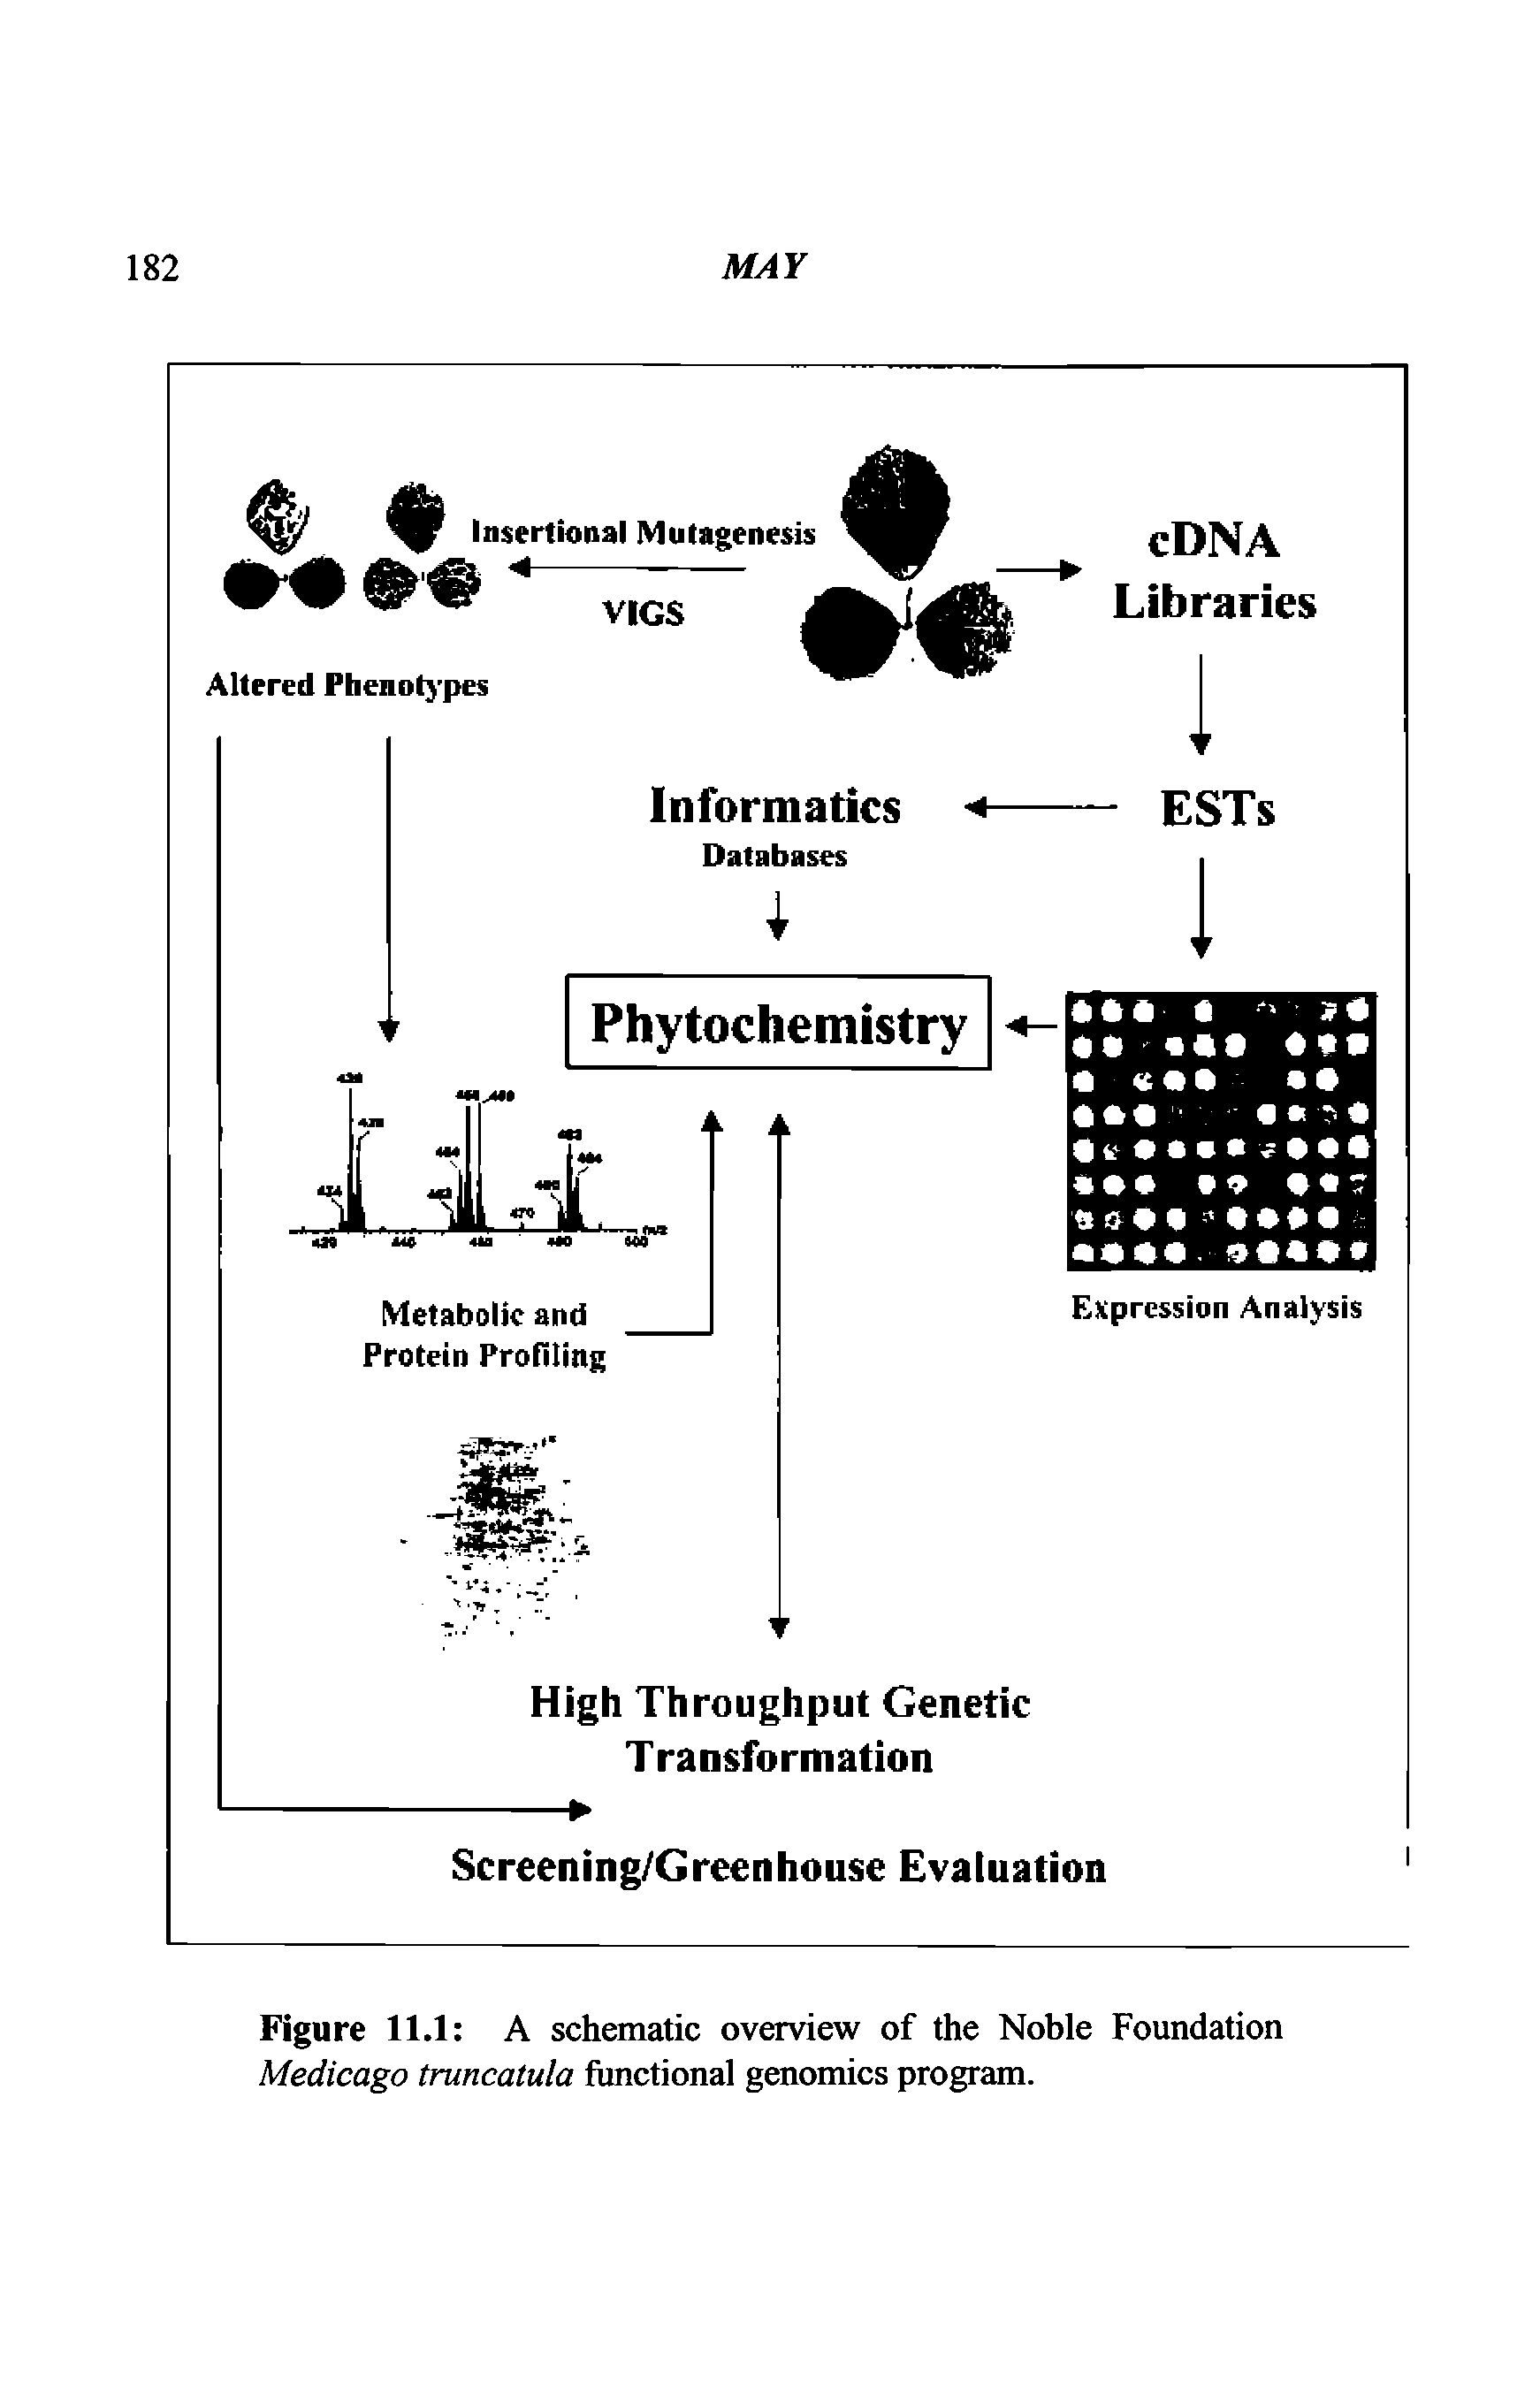 Figure 11.1 A schematic overview of the Noble Foundation Medicago truncatula functional genomics program.